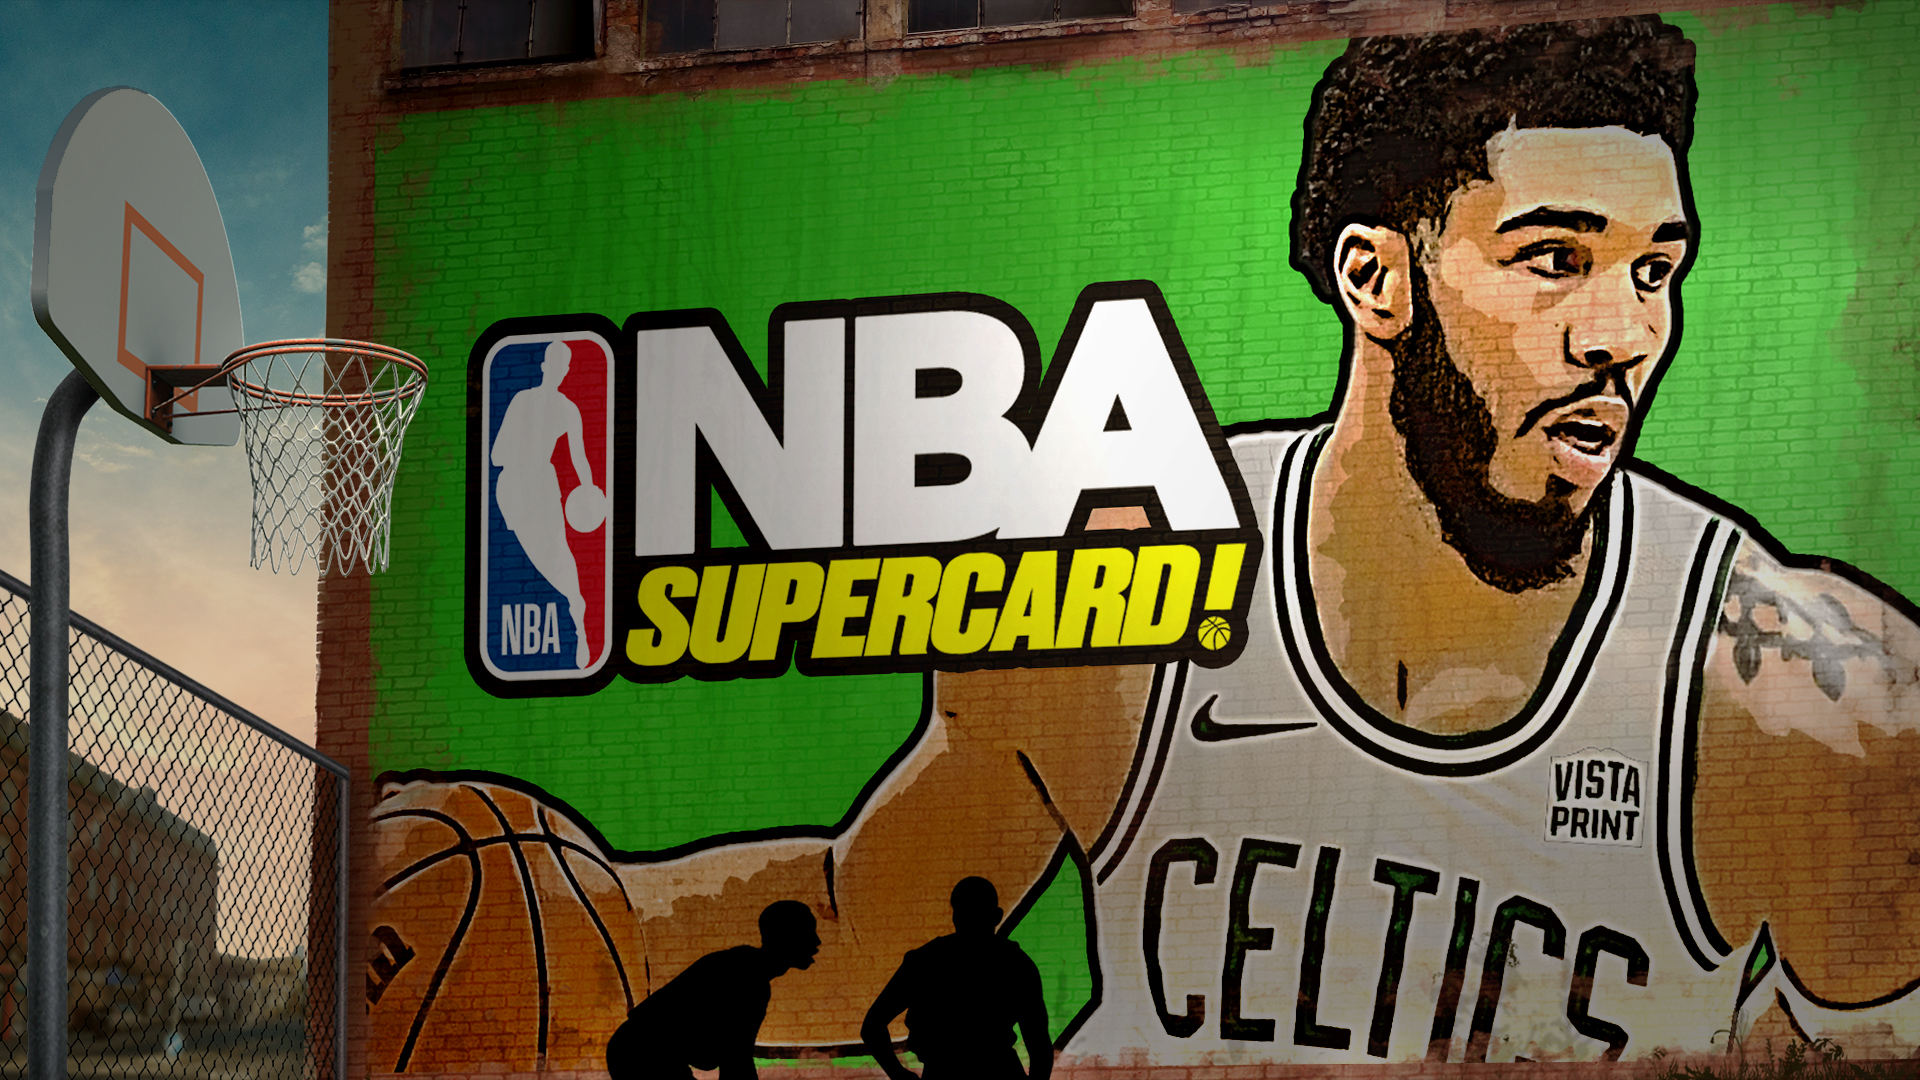 Play NBA Supercard